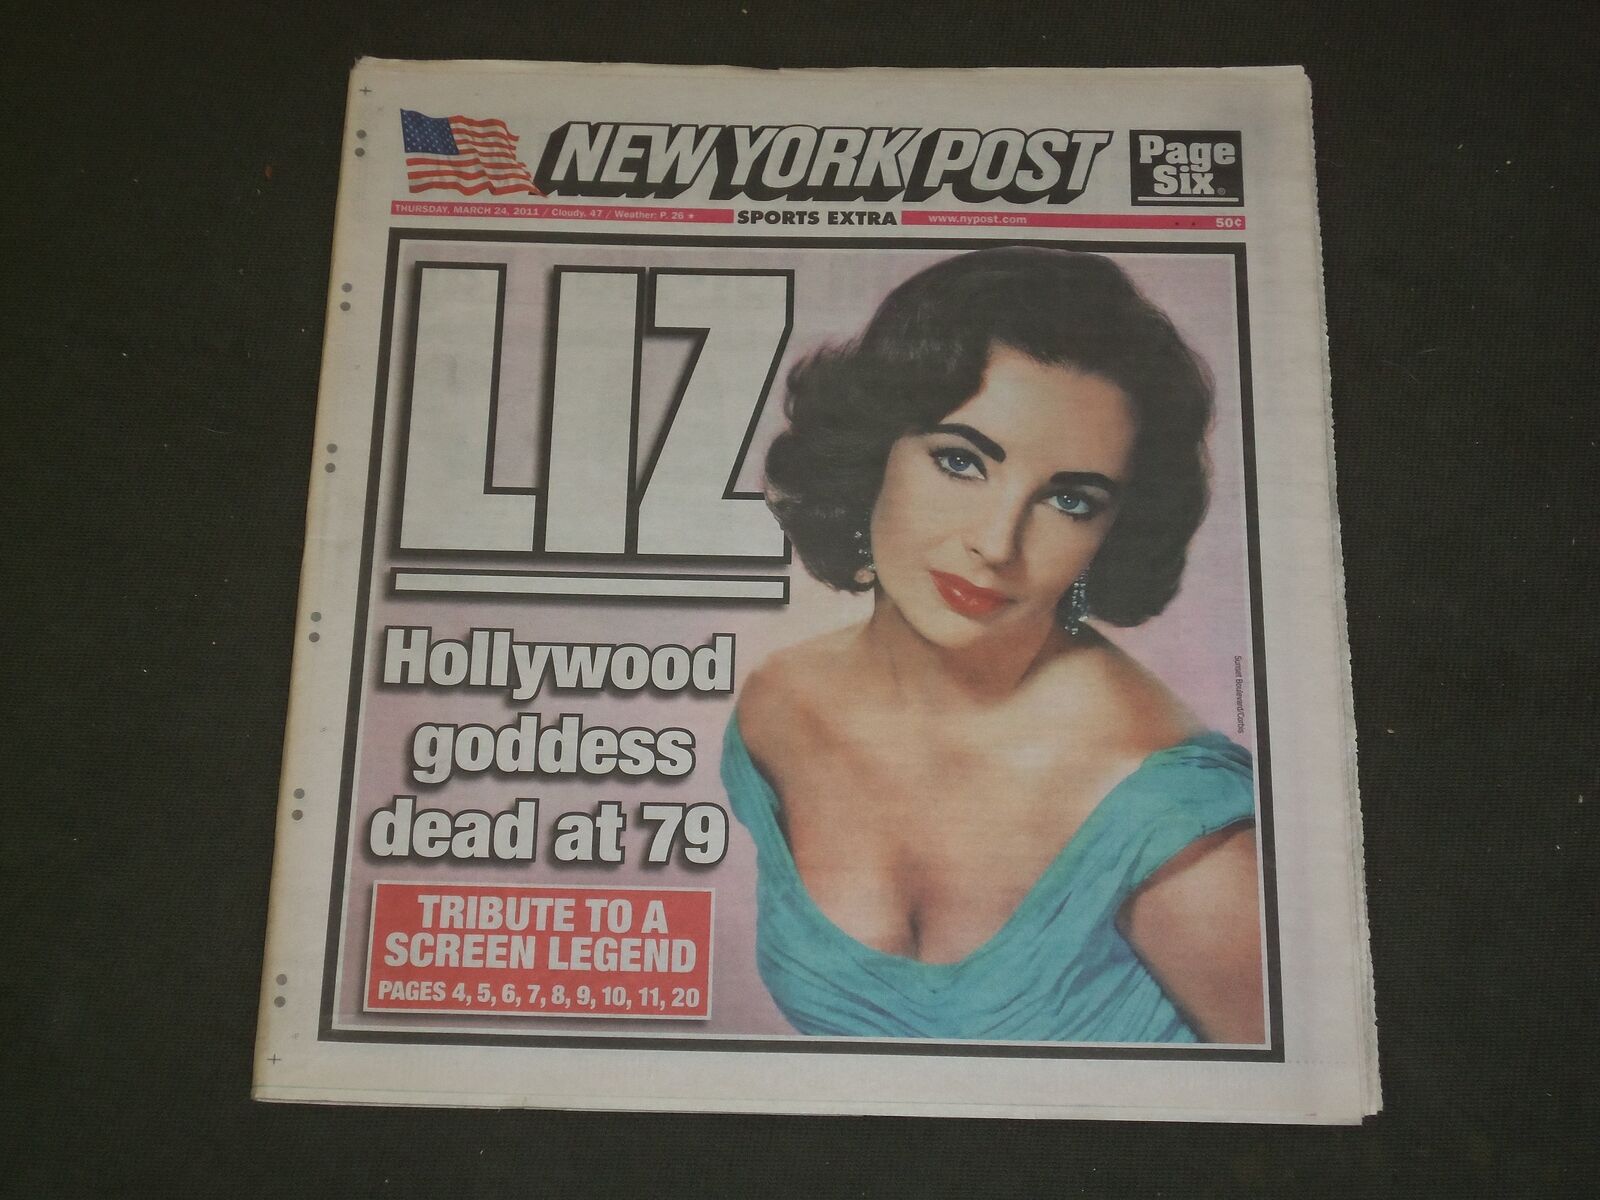 2011 MARCH 24 NEW YORK POST NEWSPAPER - ELIZABETH TAYLOR DEAD- 1932-2011-NP 3109